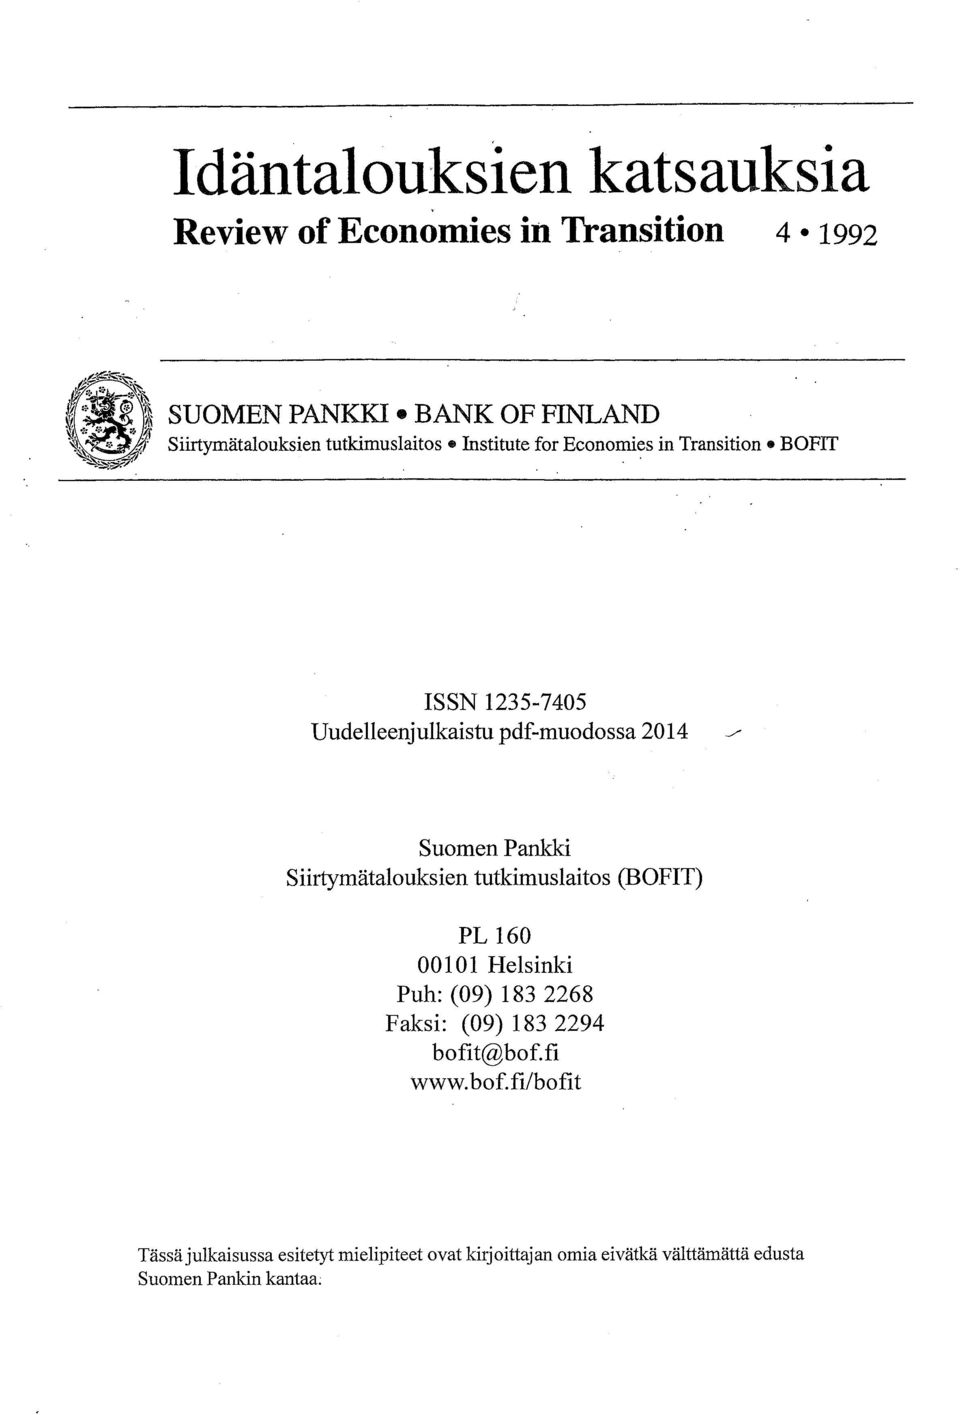 Institute for Economies in Transition BOFIT ISSN 1235-7405 Uudelleenjulkaistu pdf-muodossa 2014 /' Suomen Pankki